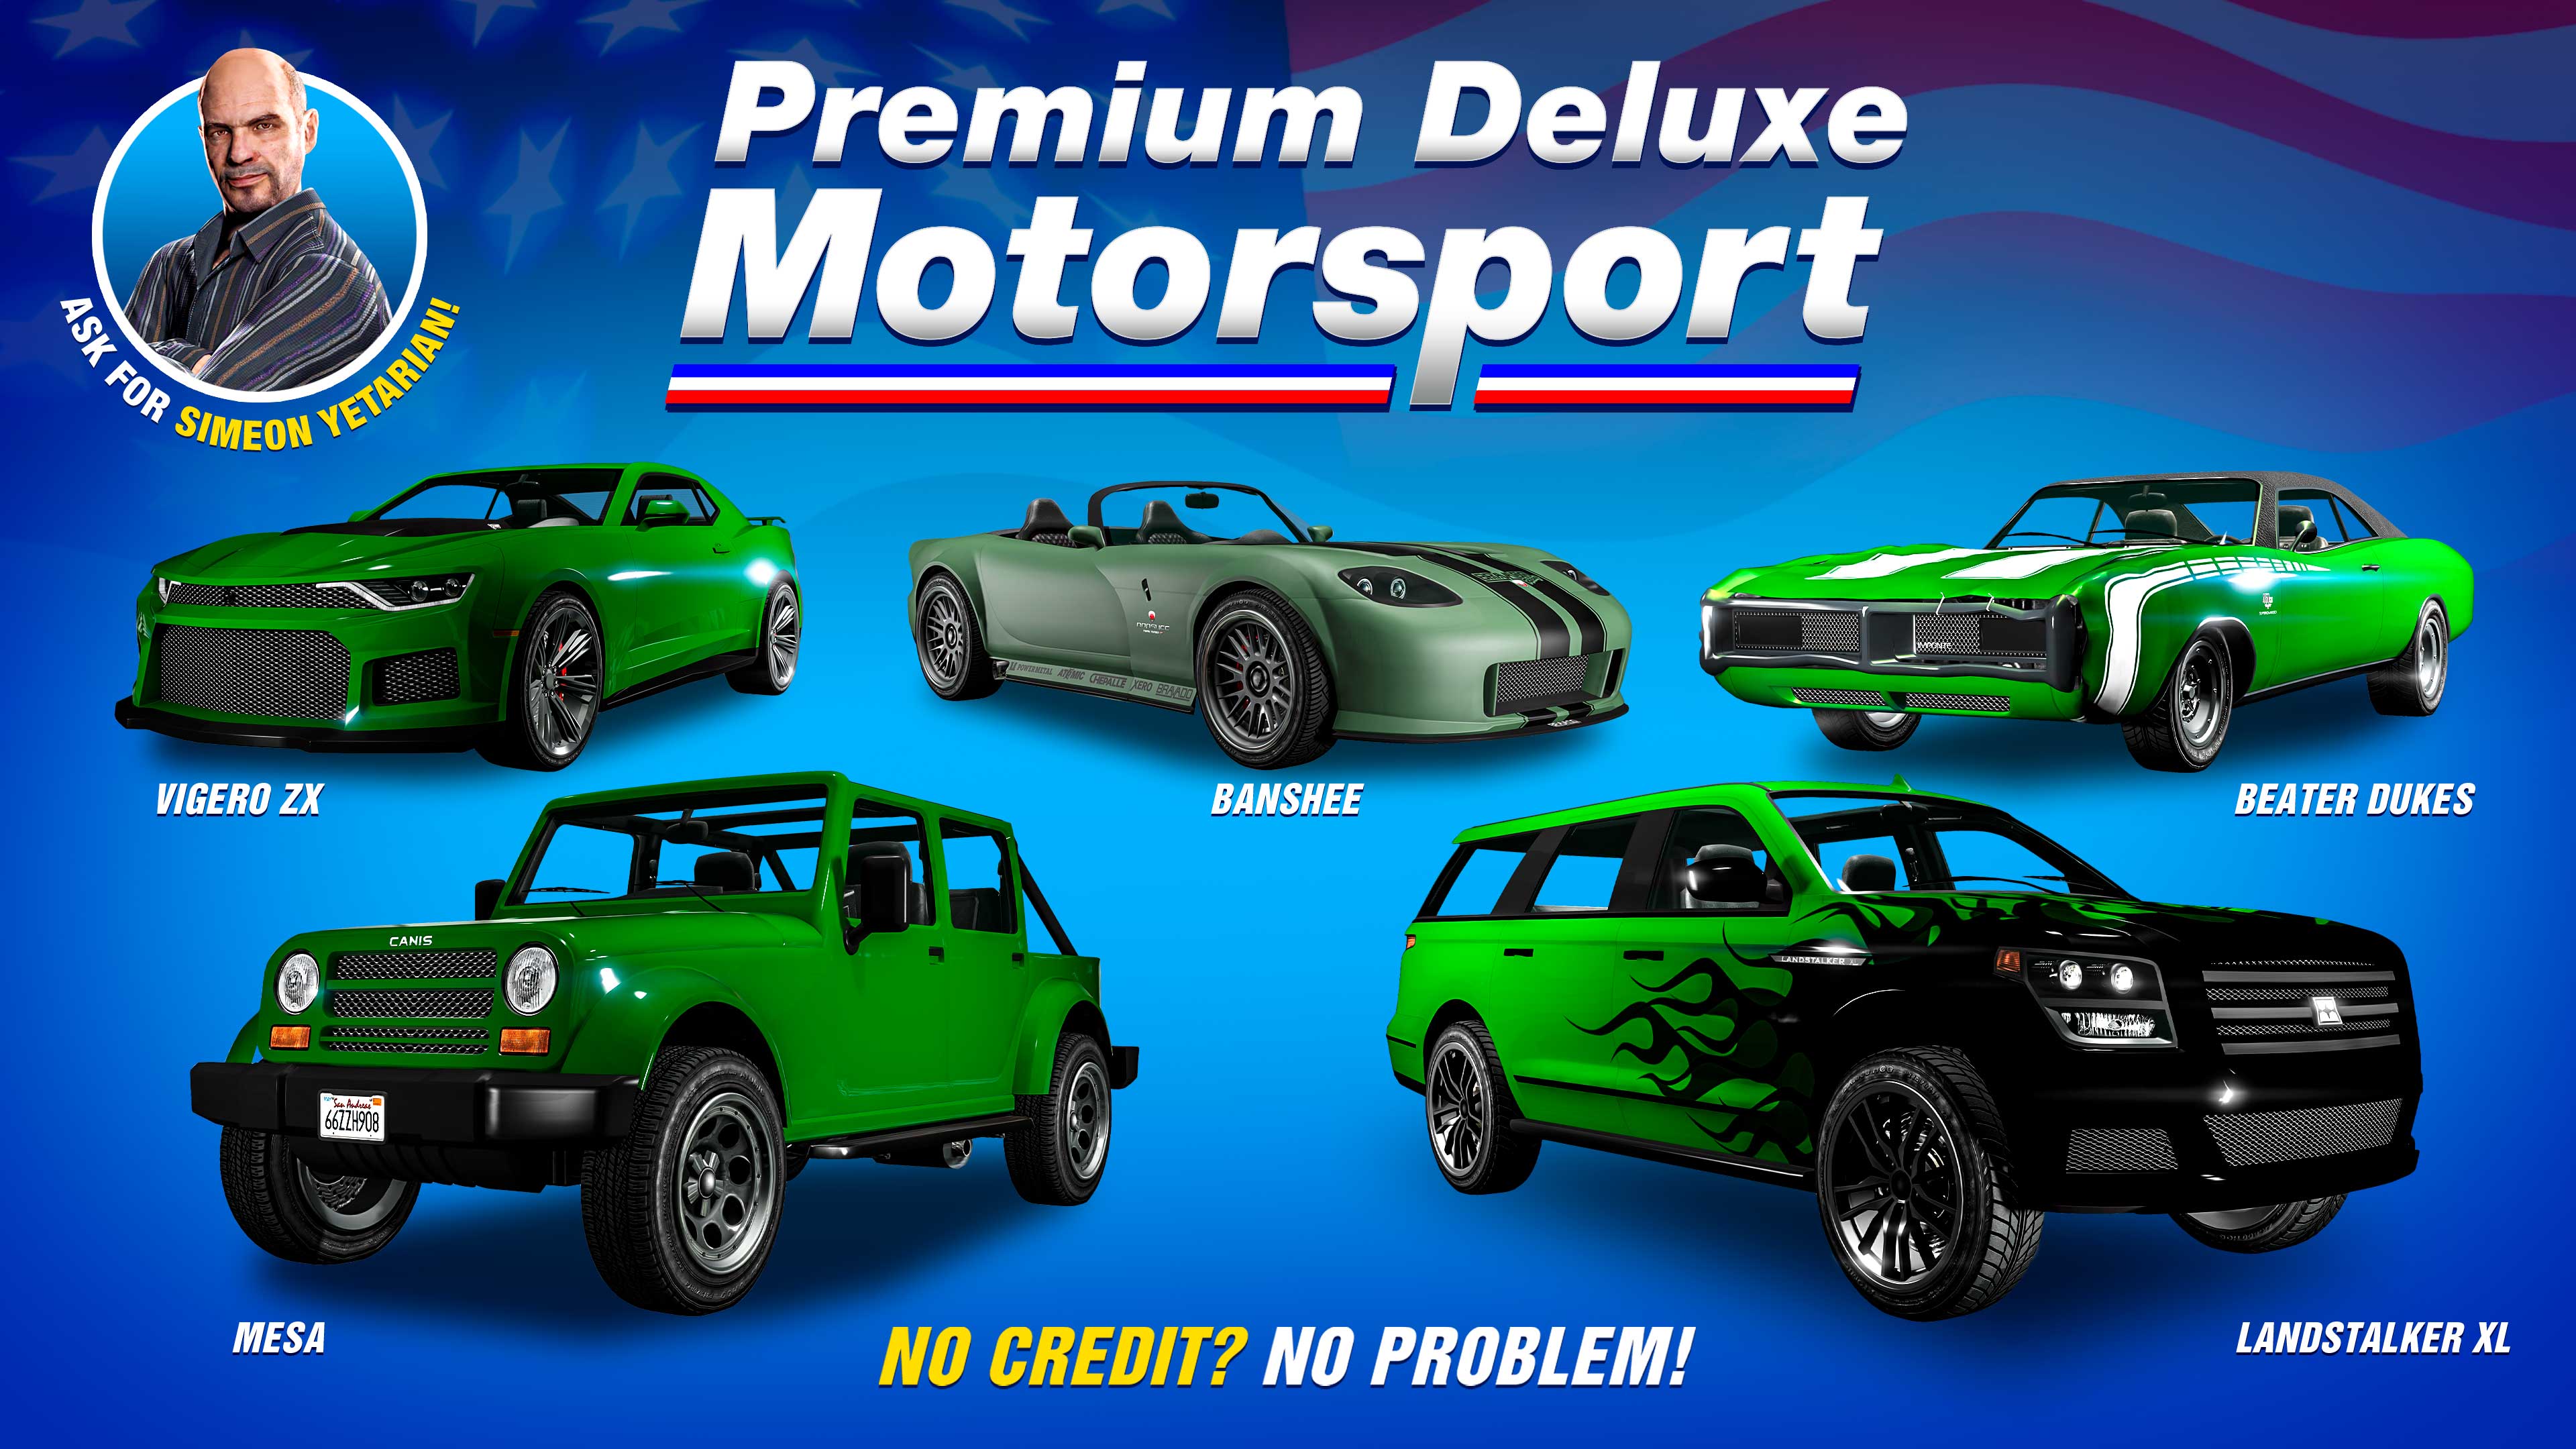 pôster dos veículos da concessionária Premium Deluxe Motorsport